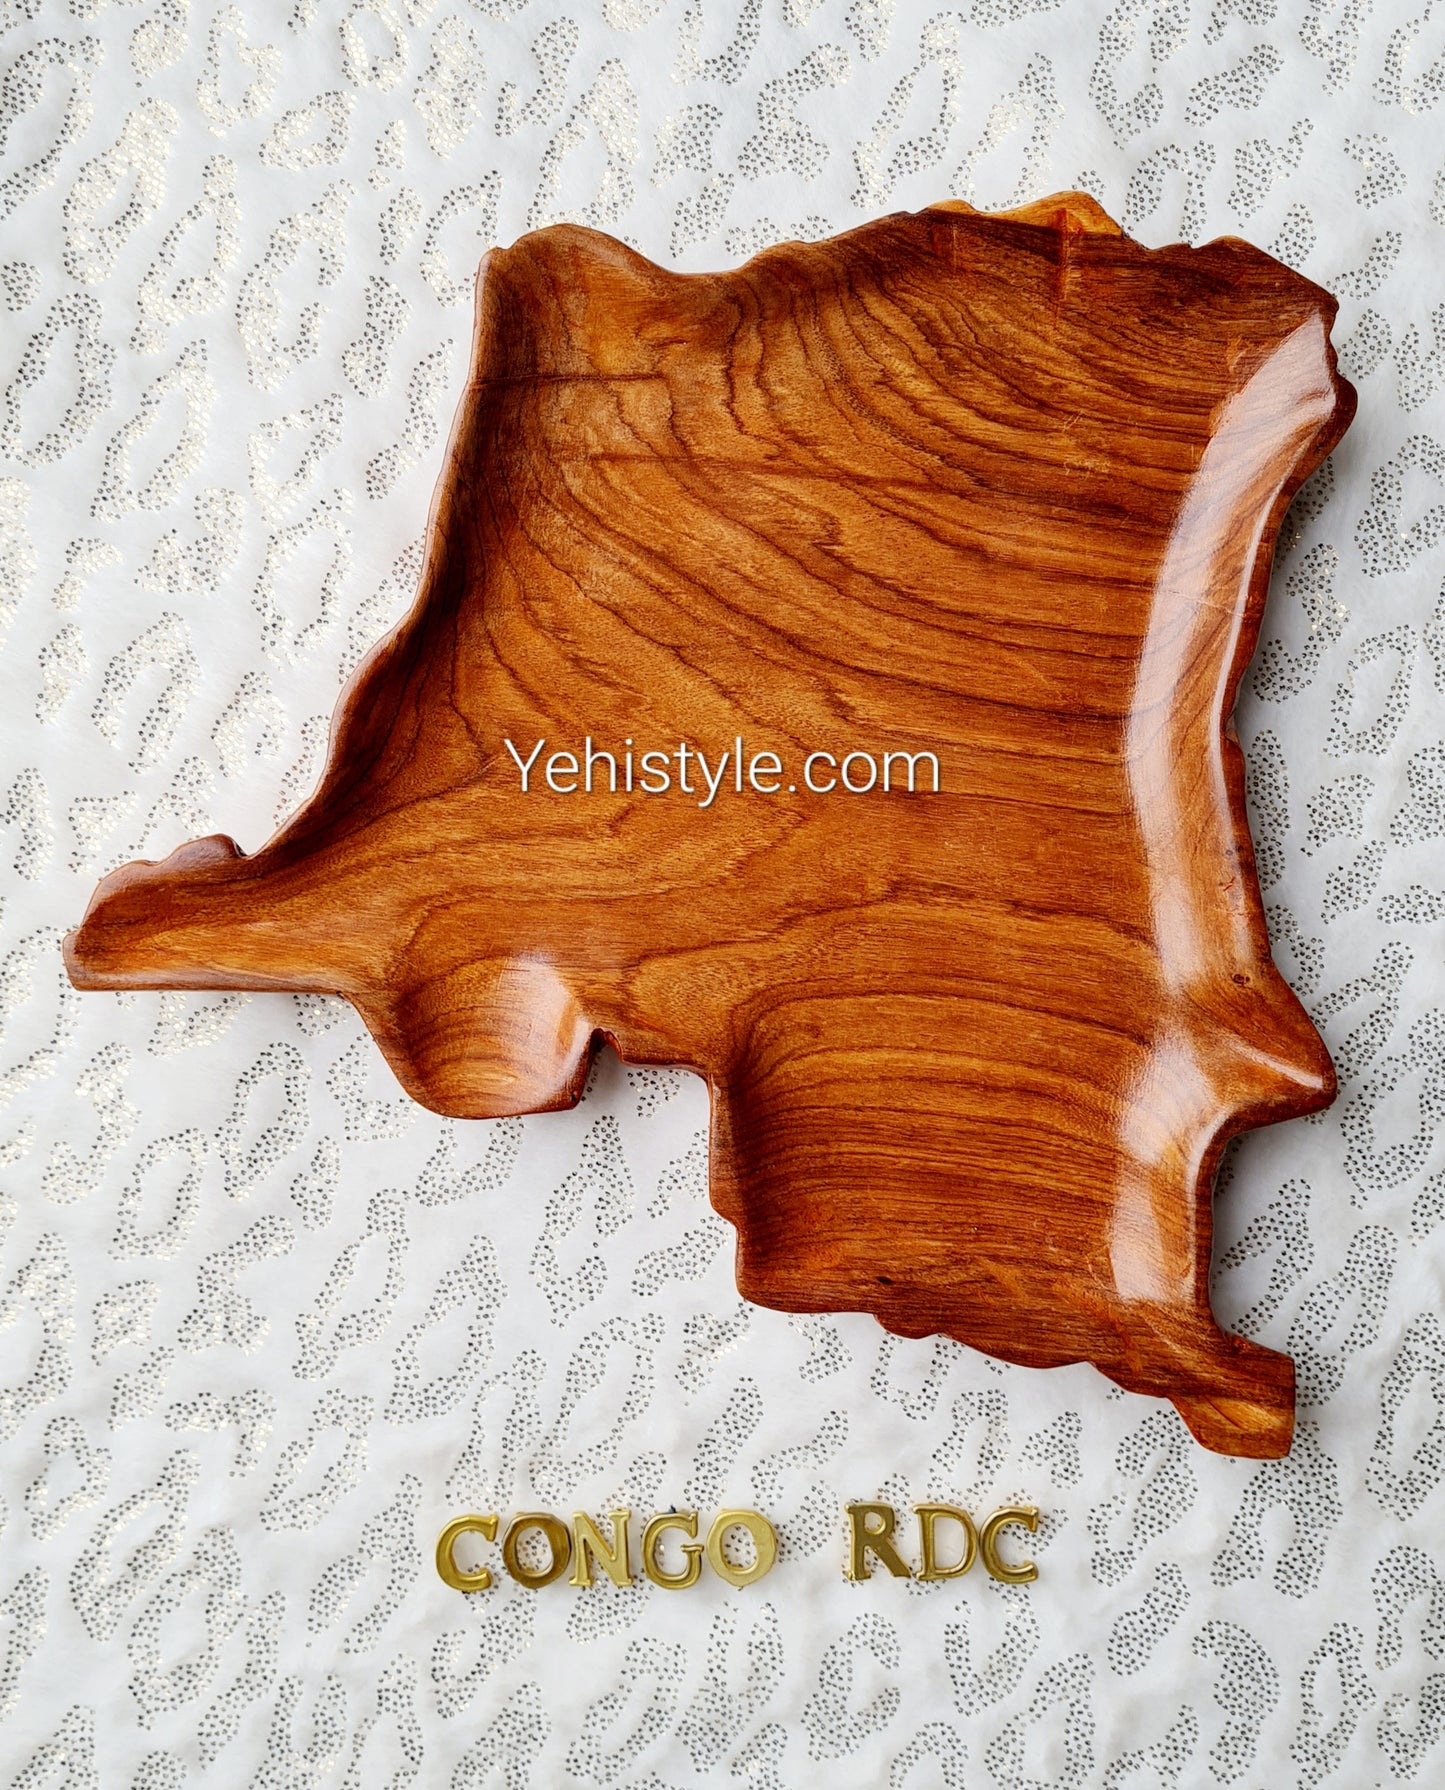 Assiette en bois Congo Kinshasa